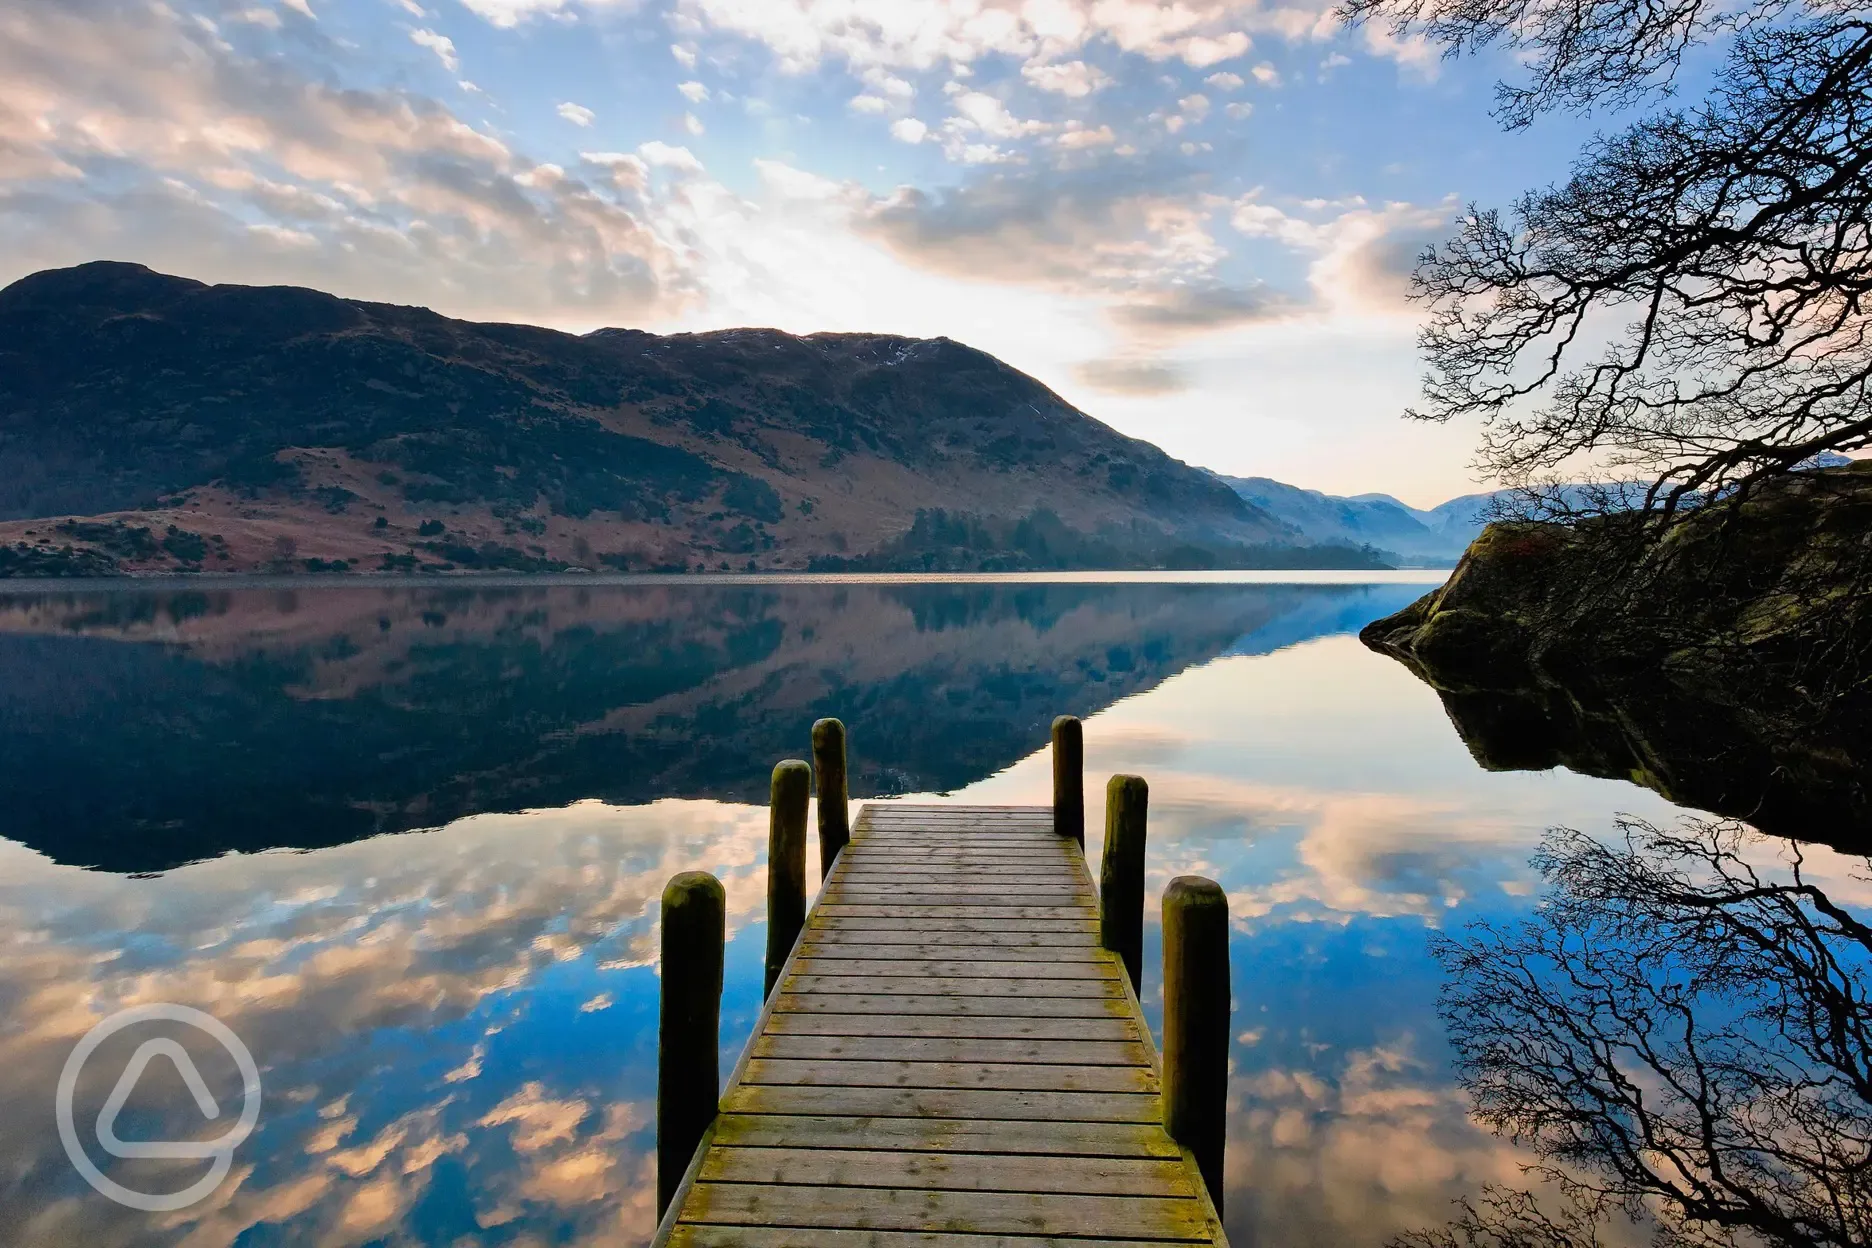 The beautiful Lake District